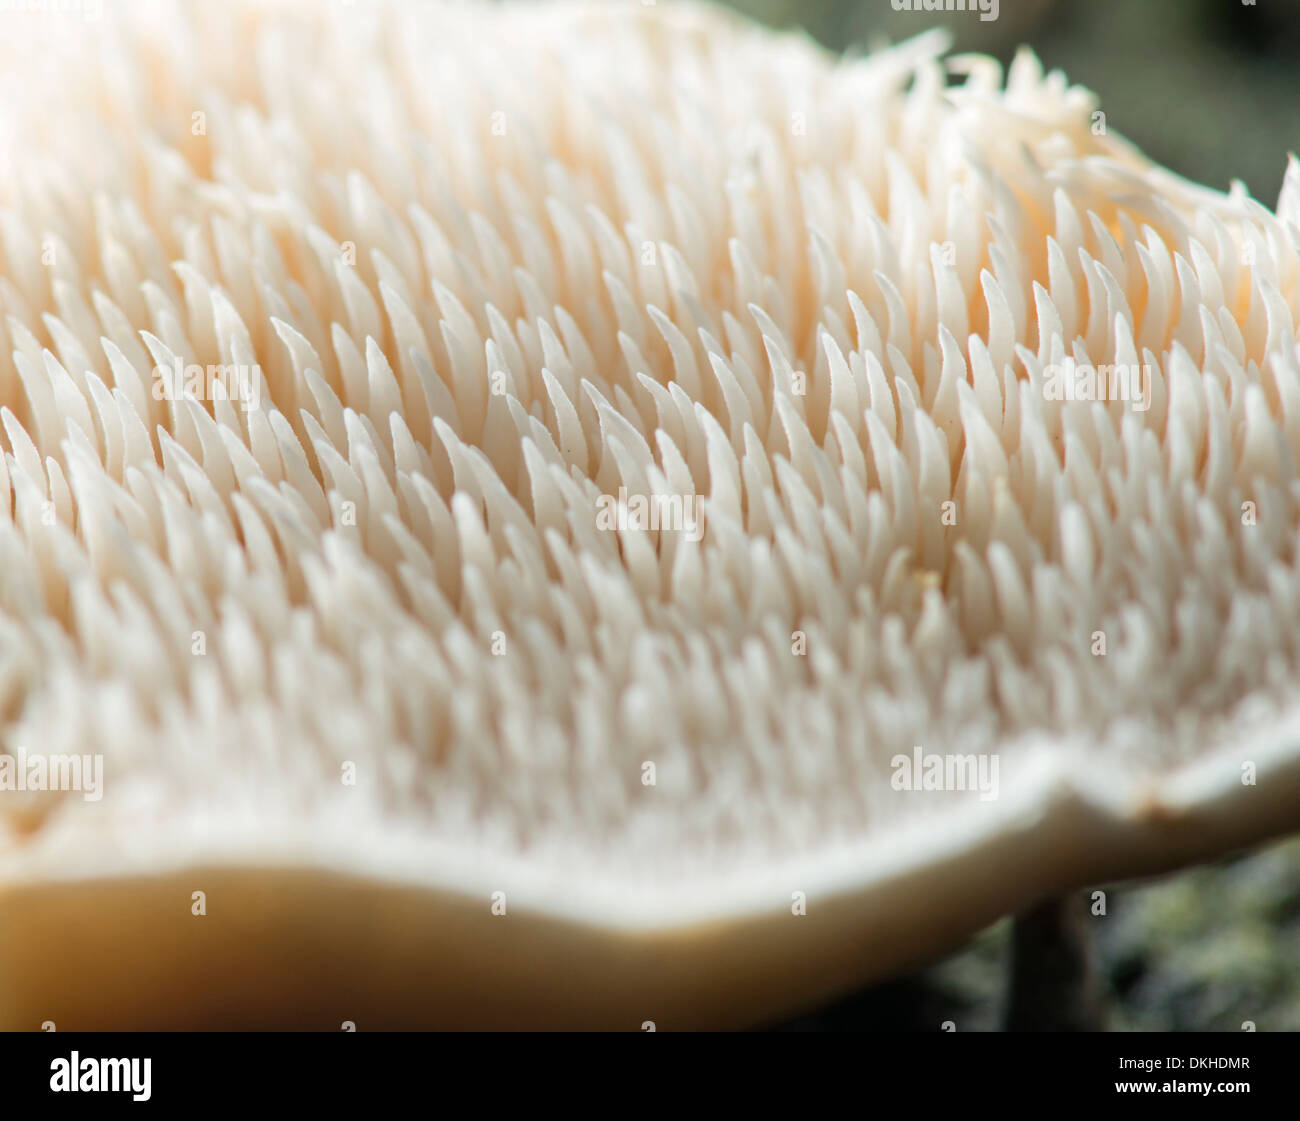 Legno fungo Hedgehog: Hydnum repandum. La parte inferiore mostra le branchie dentata. Surrey, Inghilterra Foto Stock